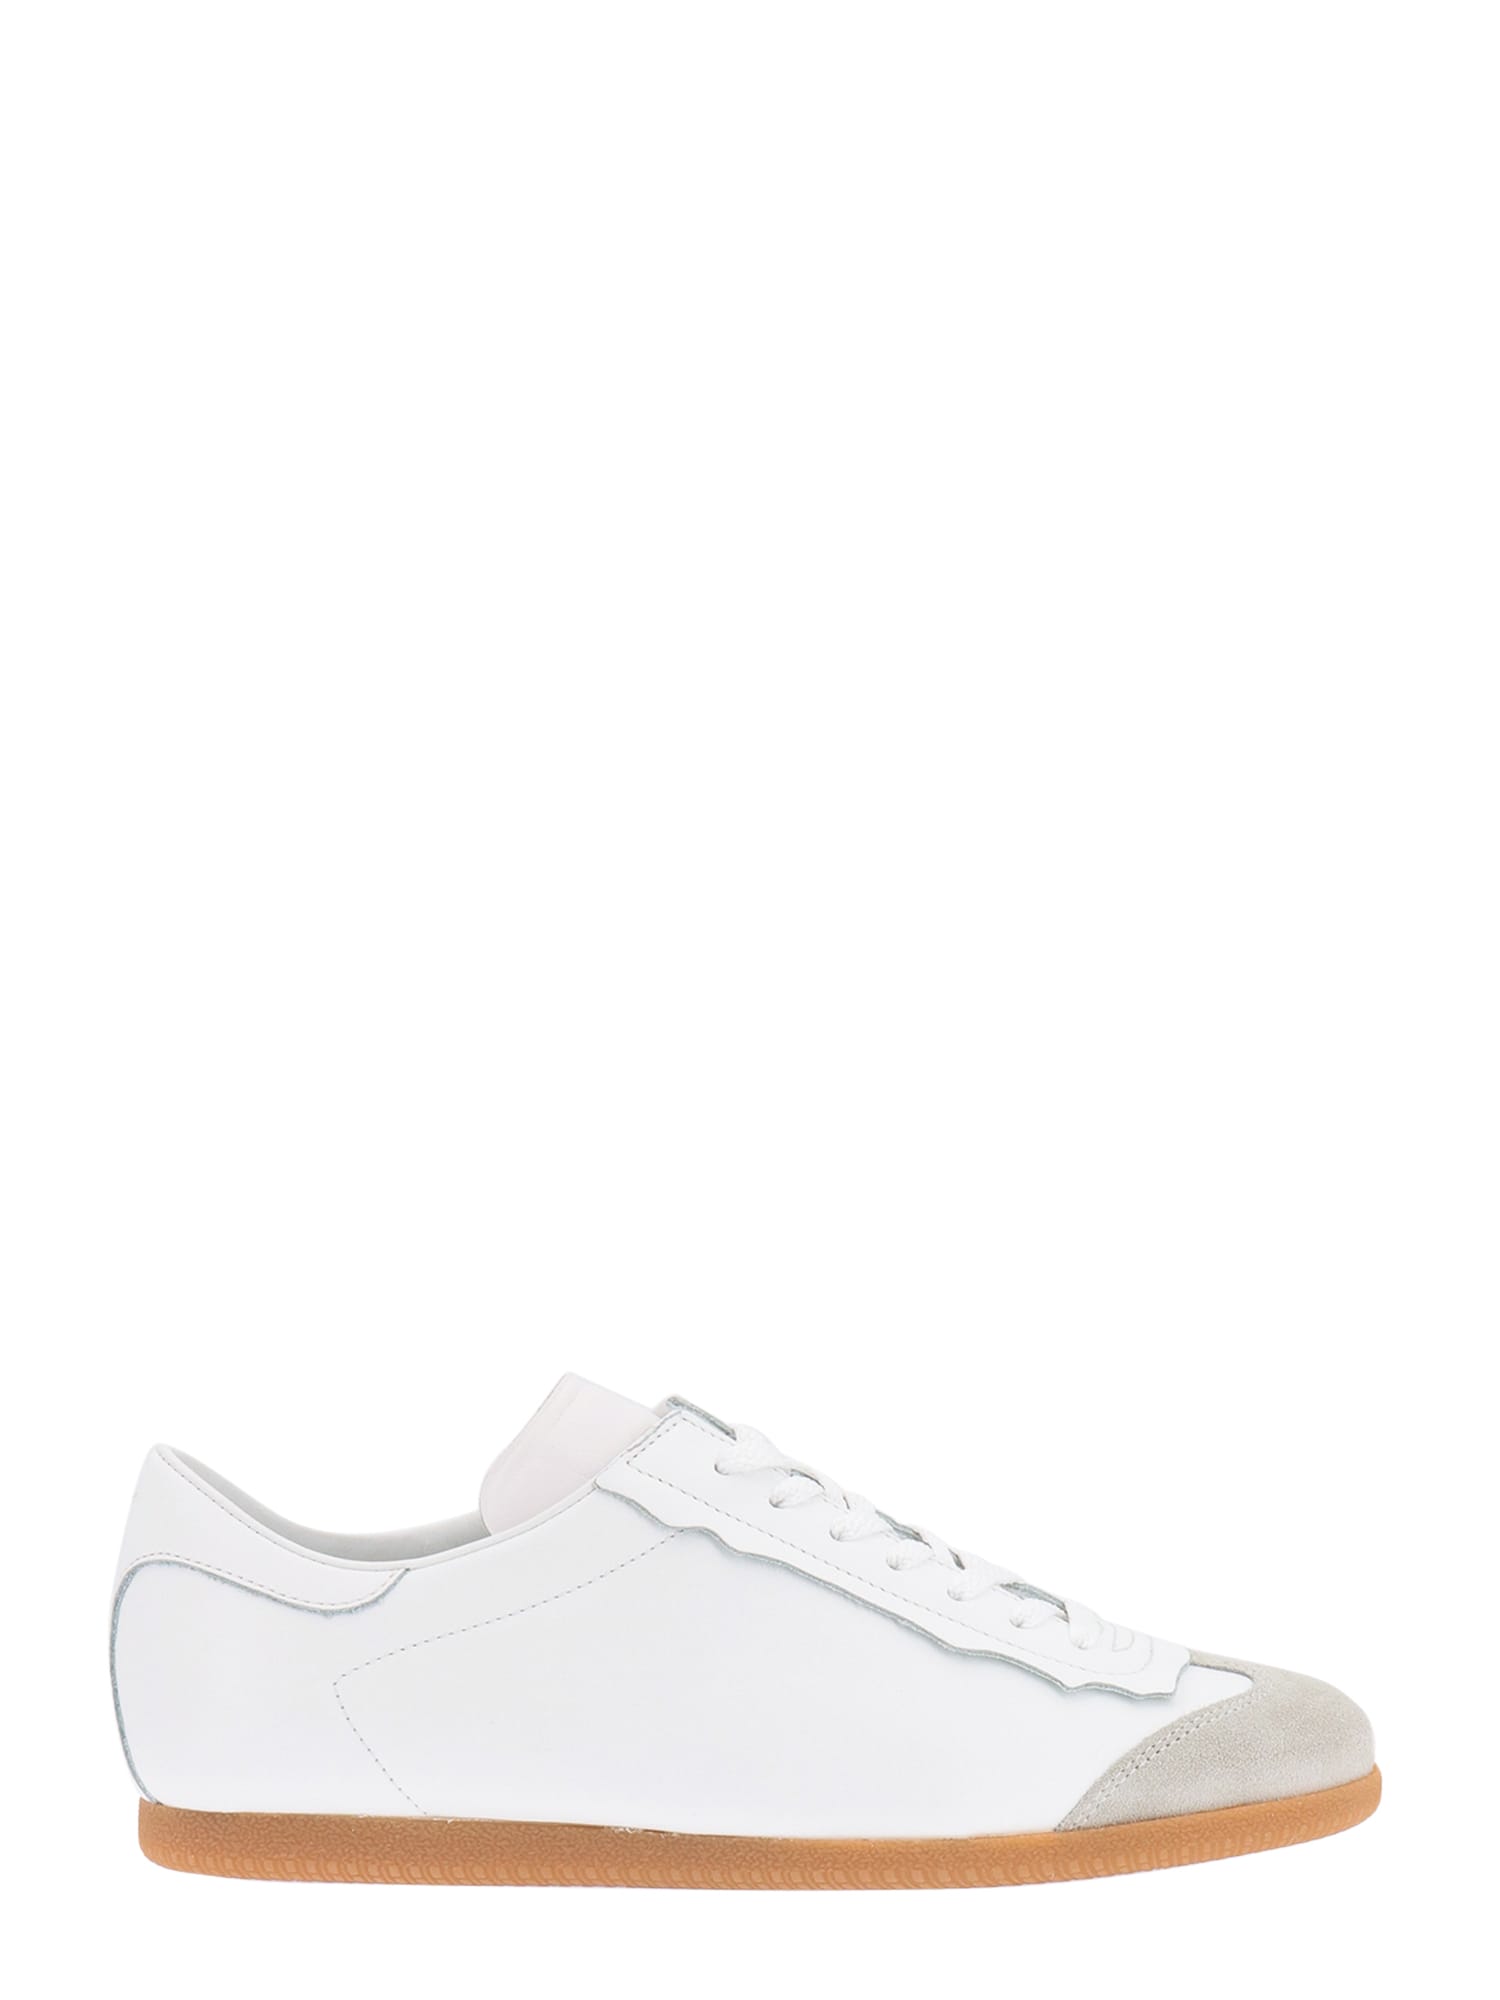 Maison Margiela Featherlight Sneakers In White